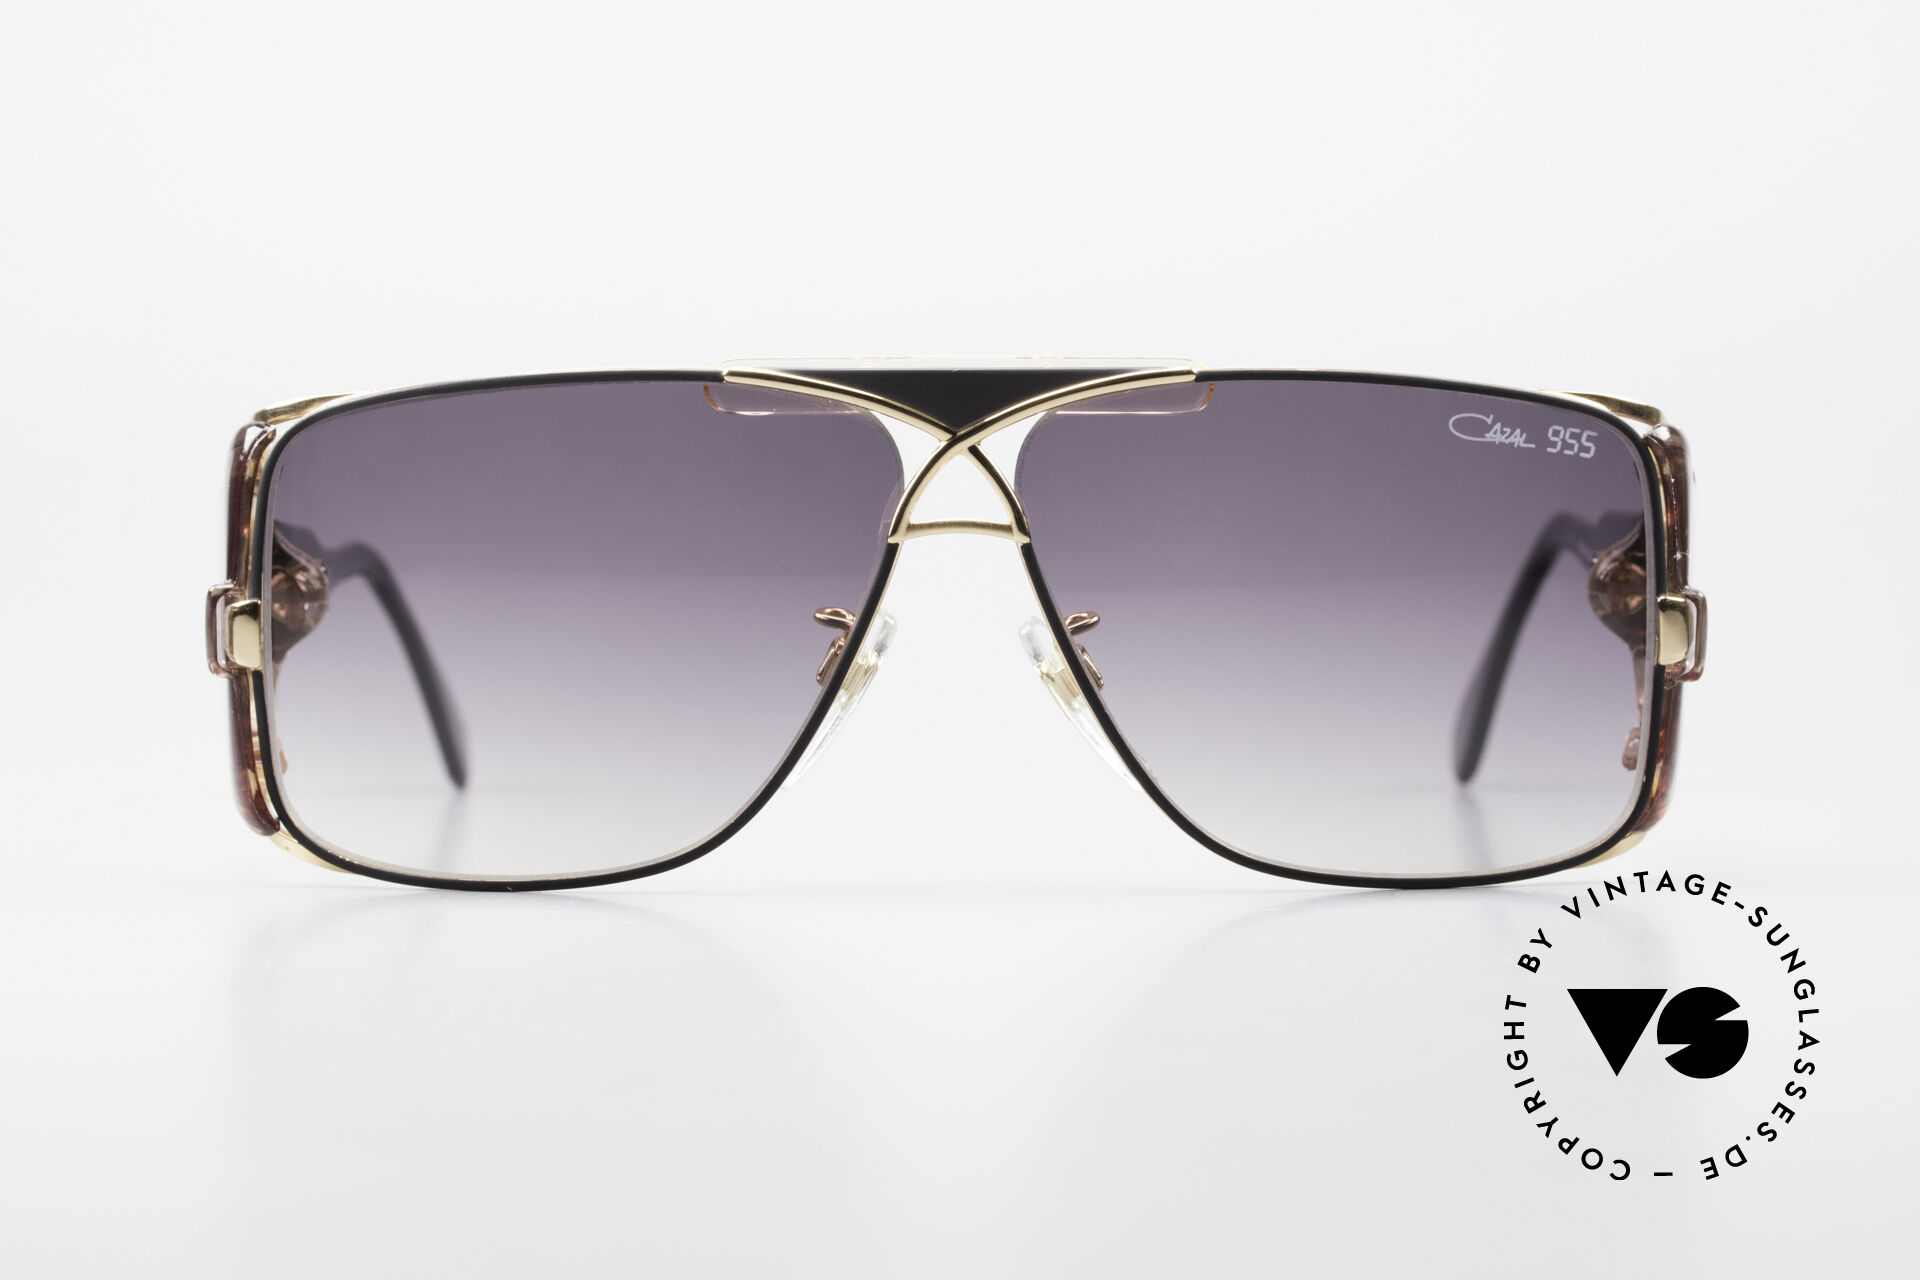 Plaske konstant Prime Sunglasses Cazal 955 Rare 80's Hip Hop Sunglasses